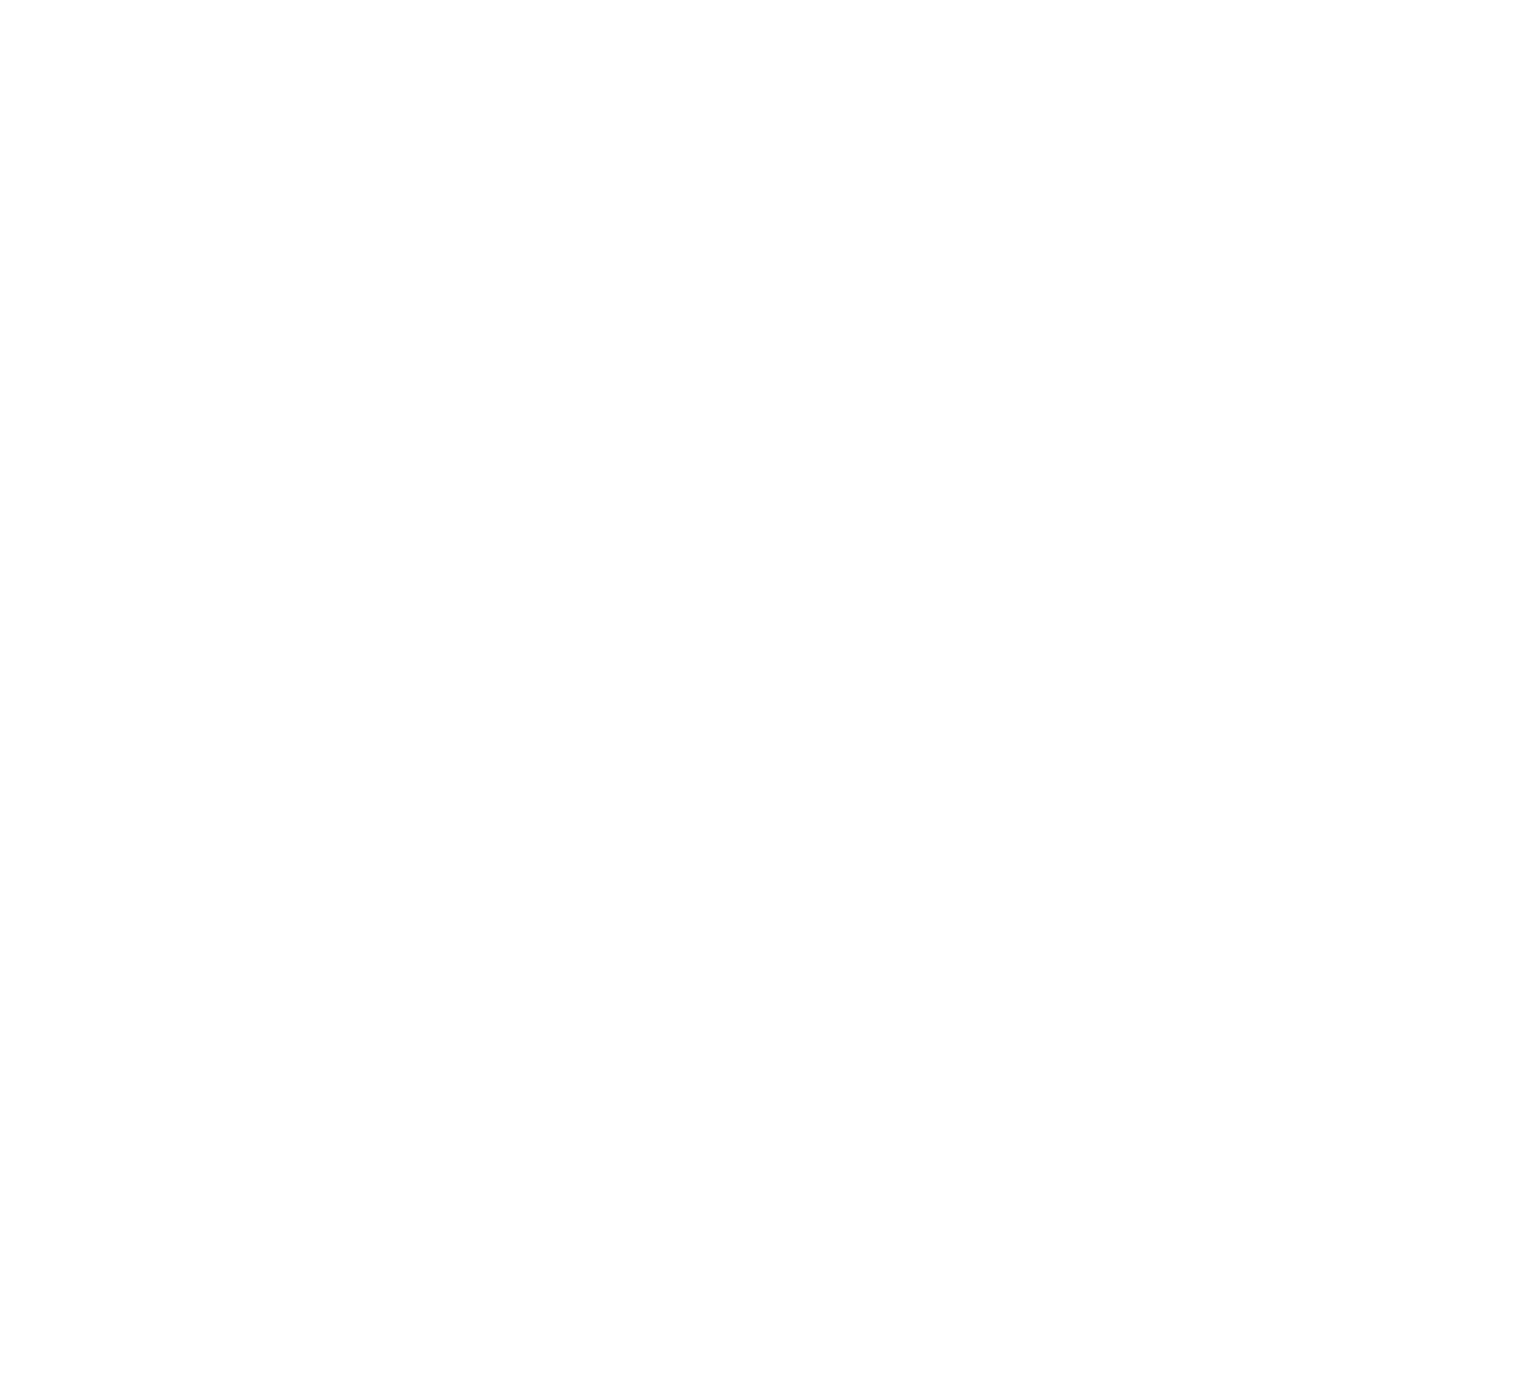 Veritone logo for dark backgrounds (transparent PNG)